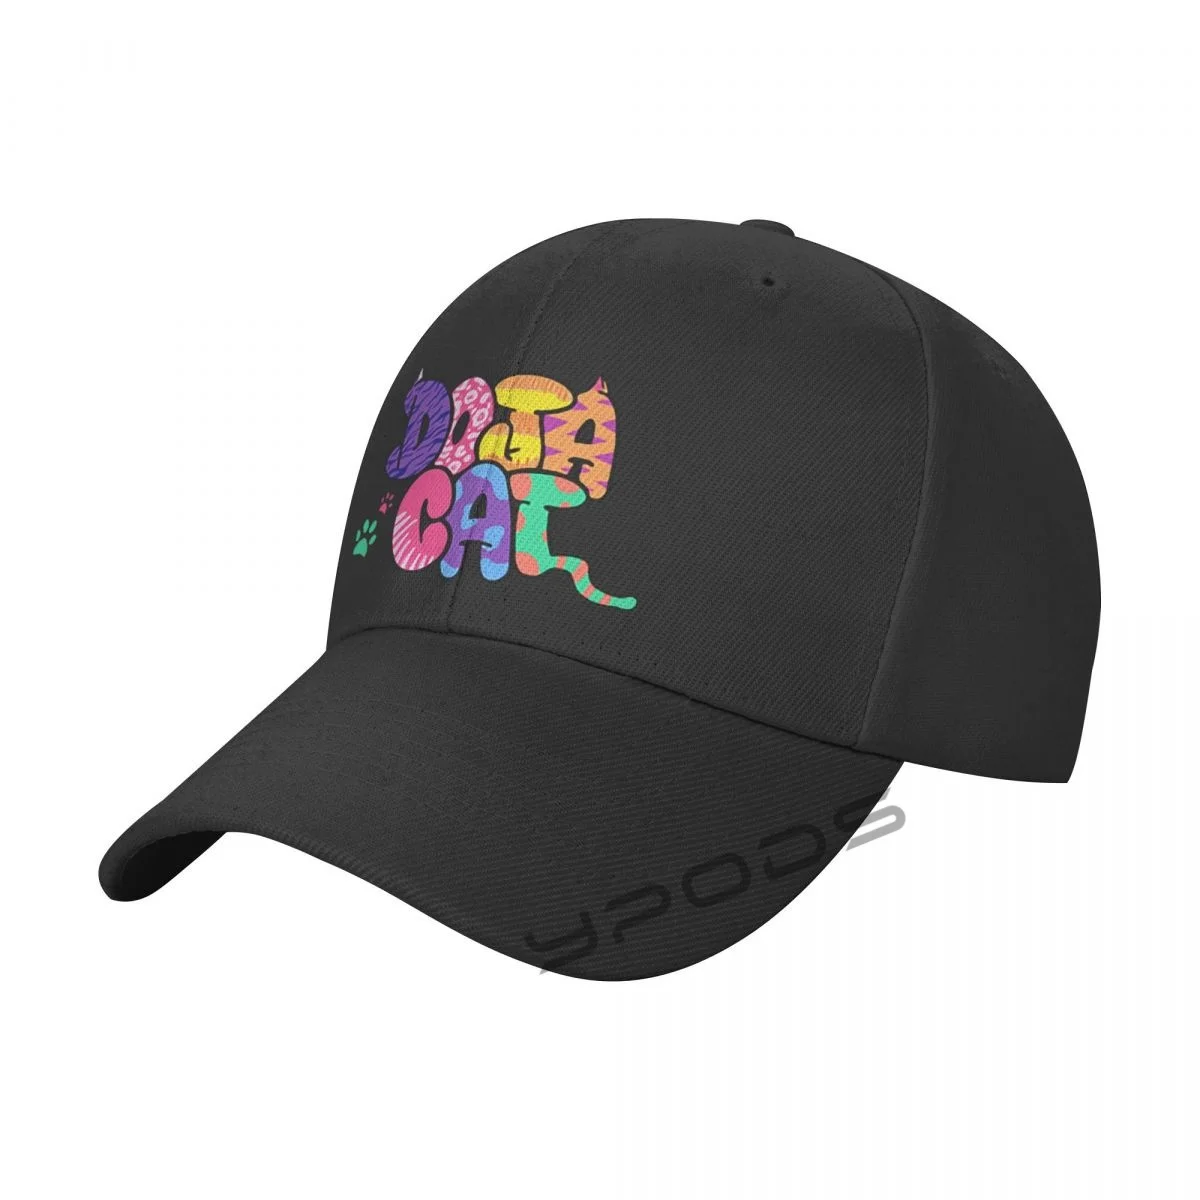 

Men's Baseball Caps DOJA CAT Women Summer Snapback Cap Adjustable Outdoor Sport Sun Hat